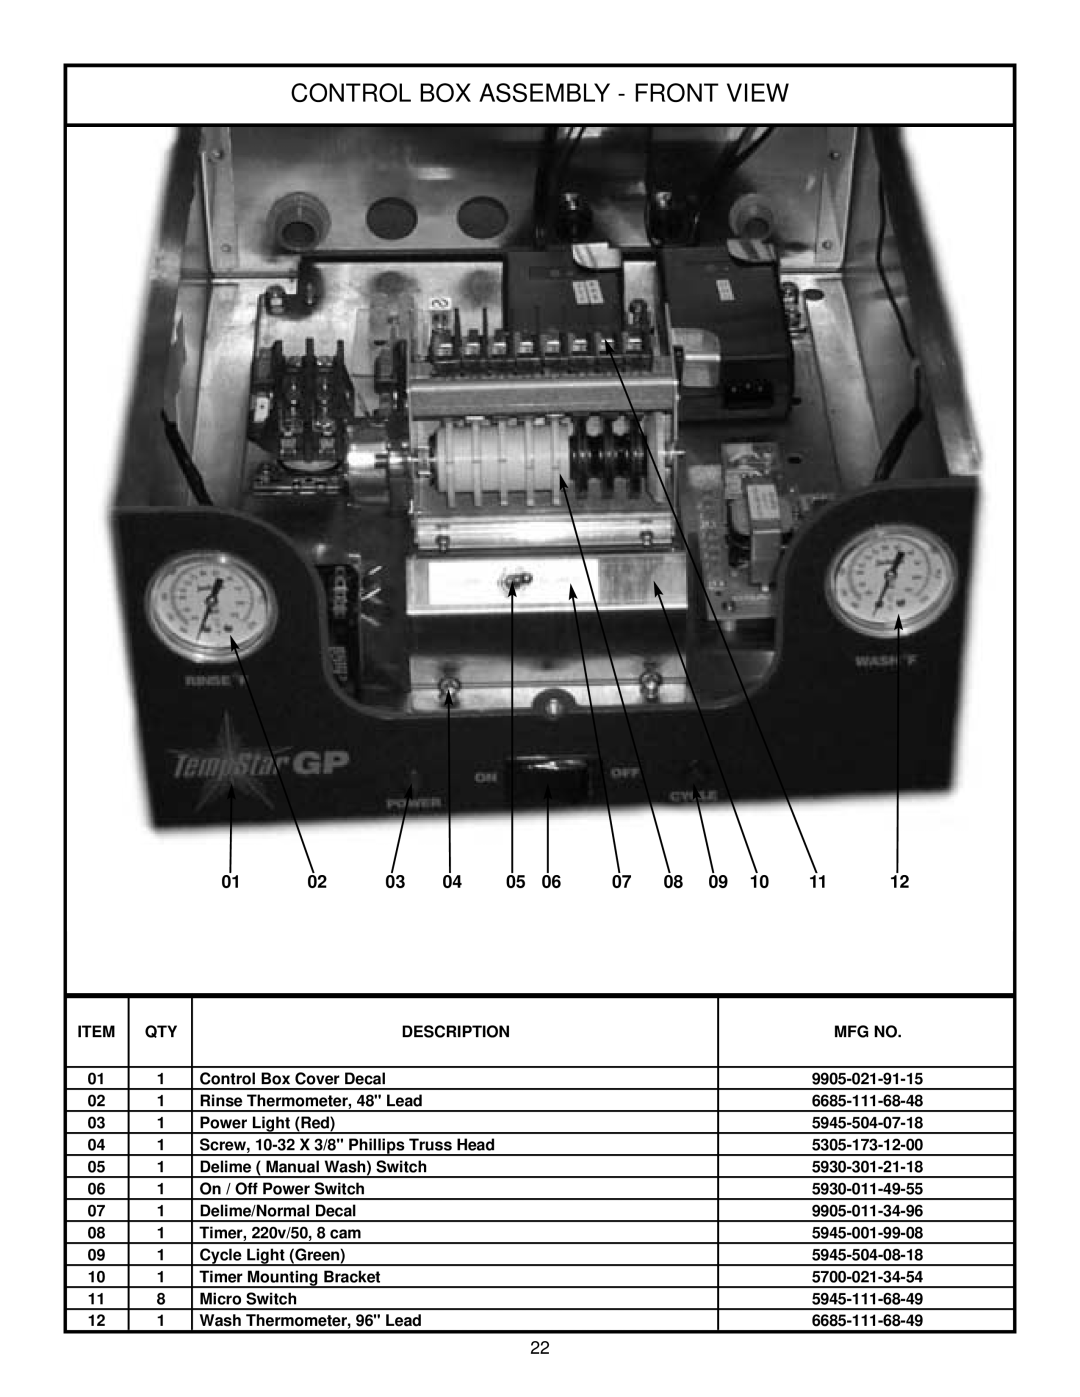 Jackson Tempstar TGP technical manual Control Box Assembly - Front View 